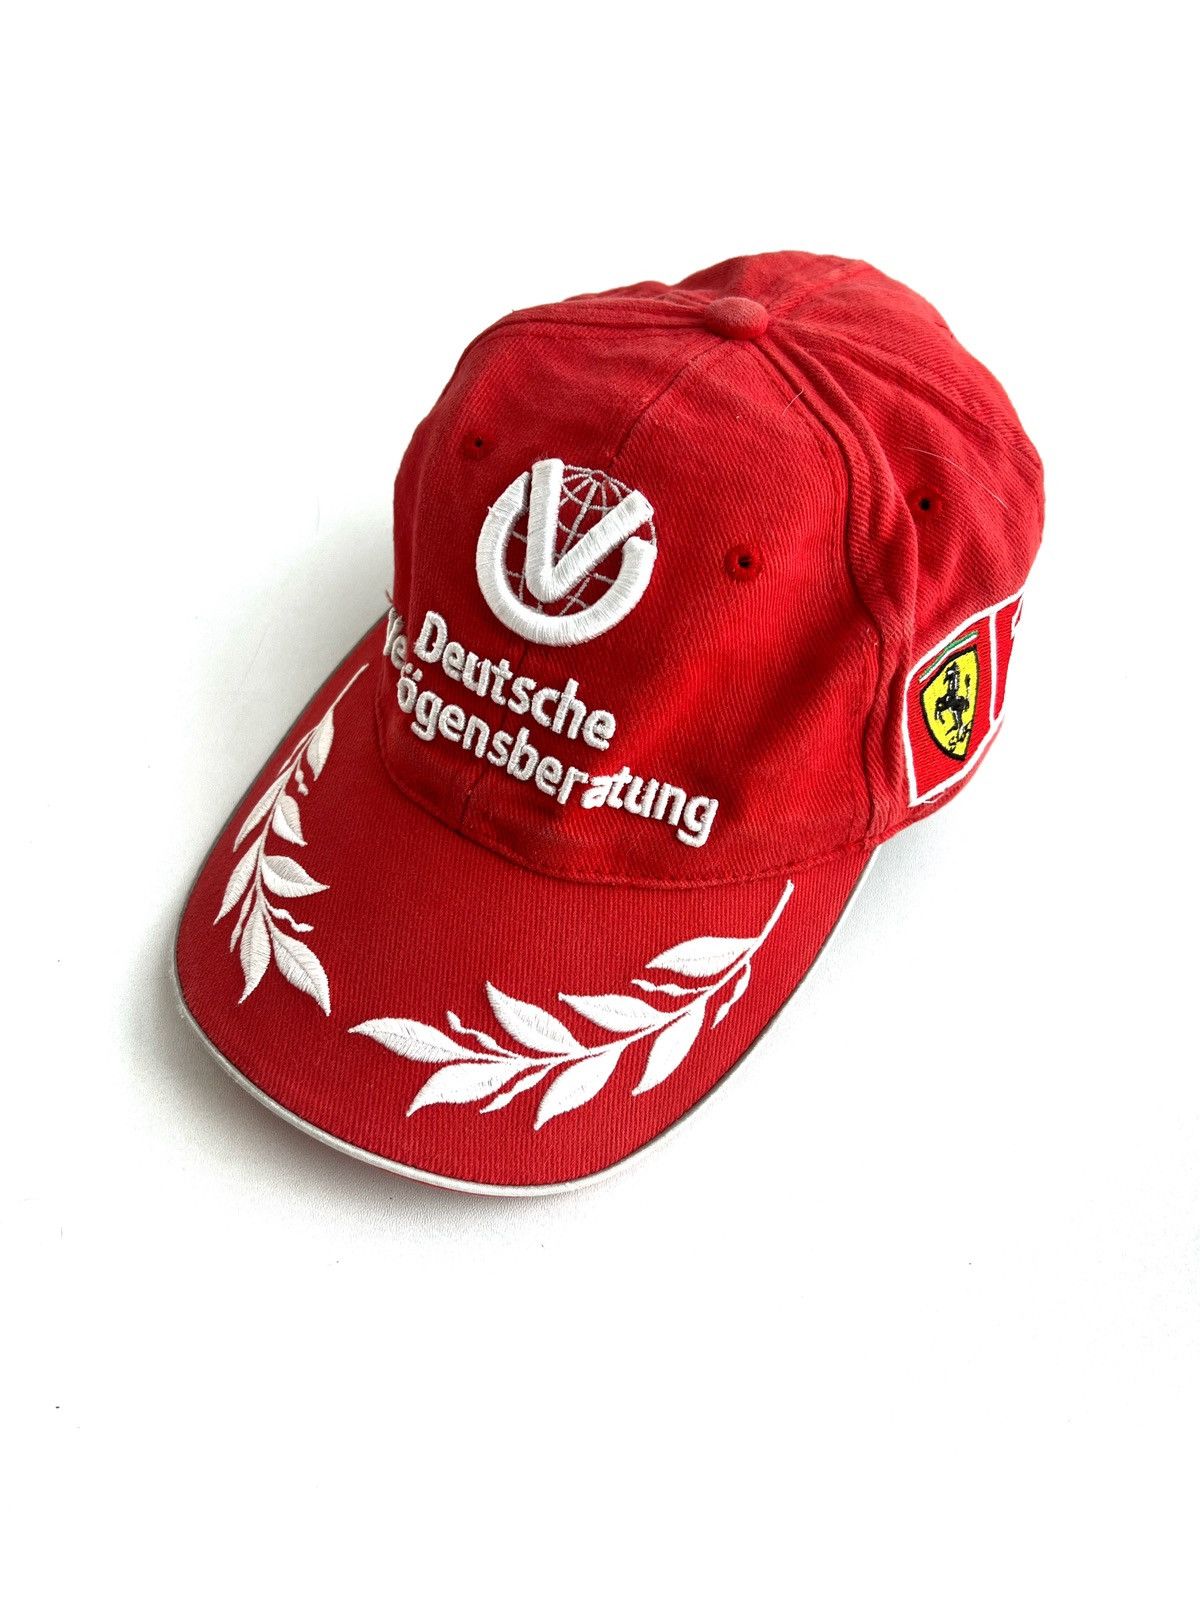 Vintage Michael Schumacher Cap F1 World Champion 2000 Vintage Racing ...